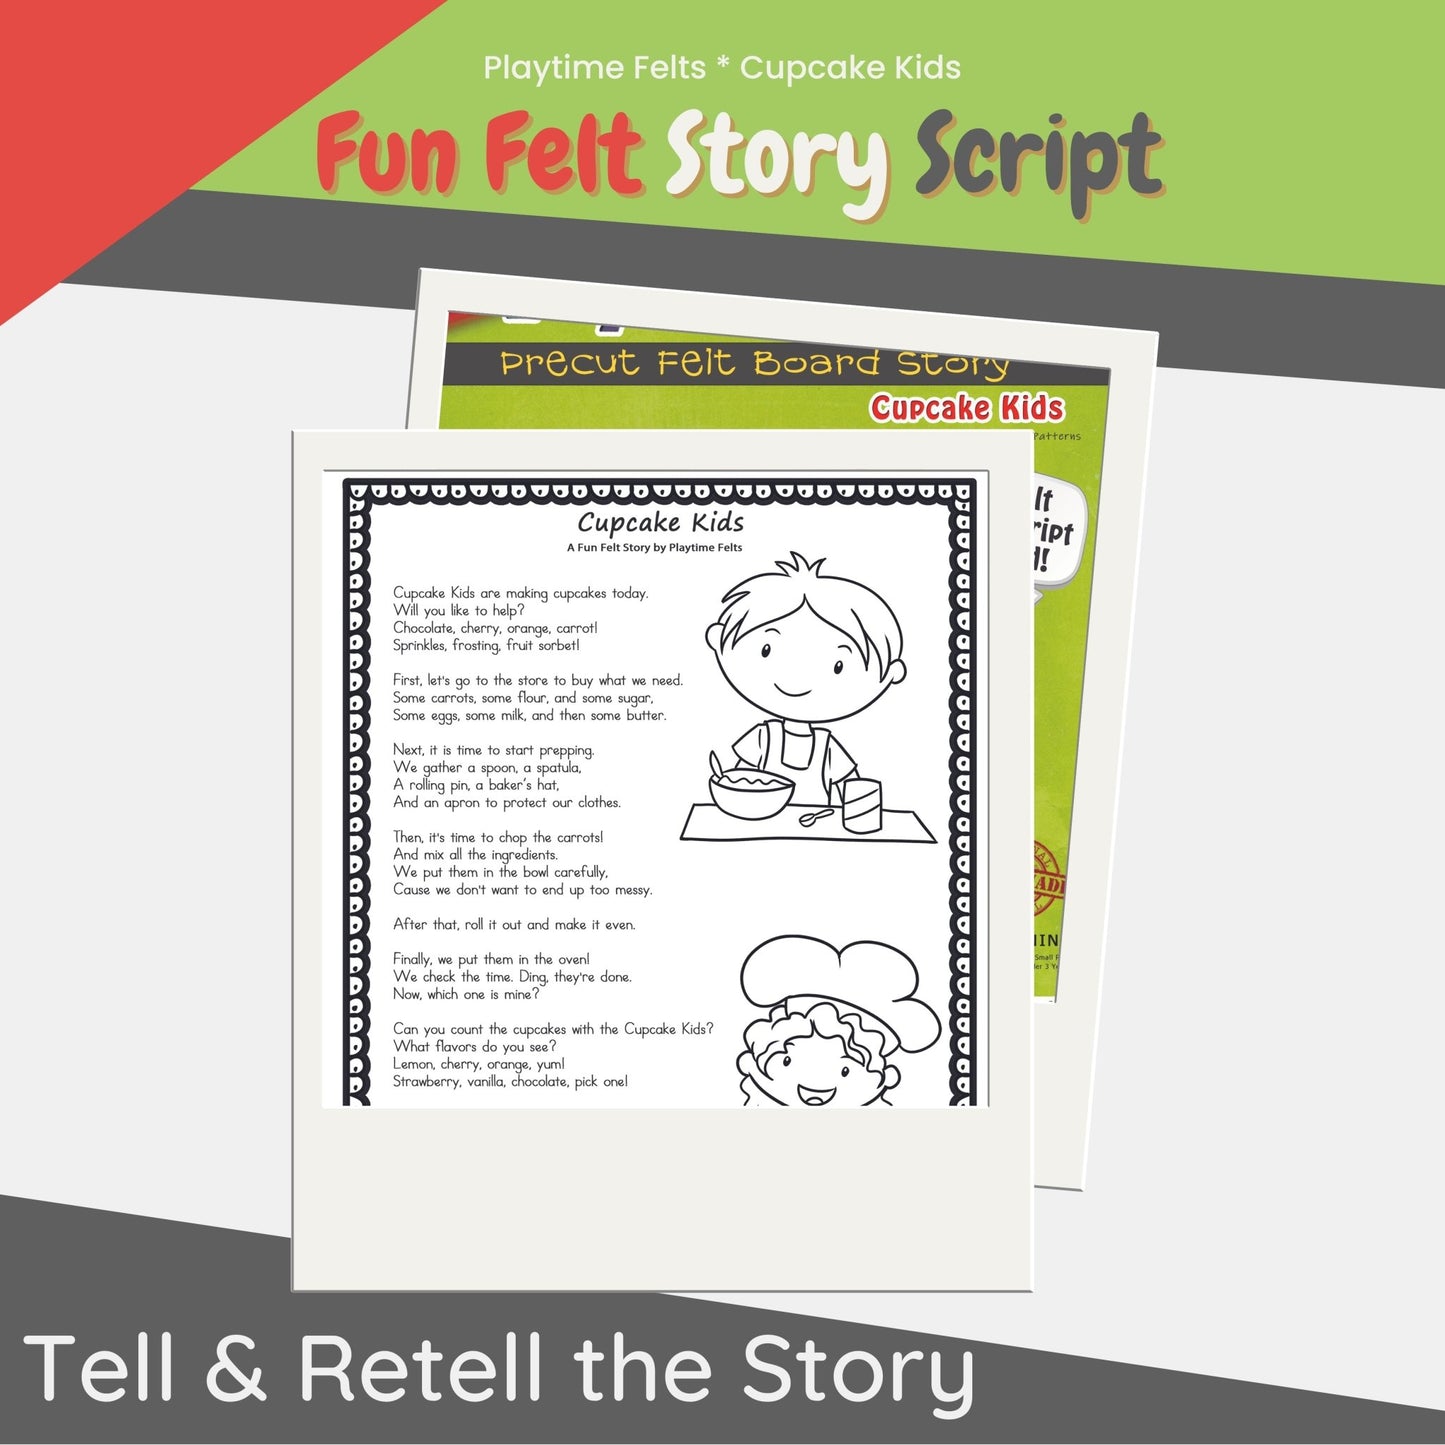 Cupcake Kids Preschool Activity Felt Board Play - Felt Board Stories for Preschool Classroom Playtime Felts